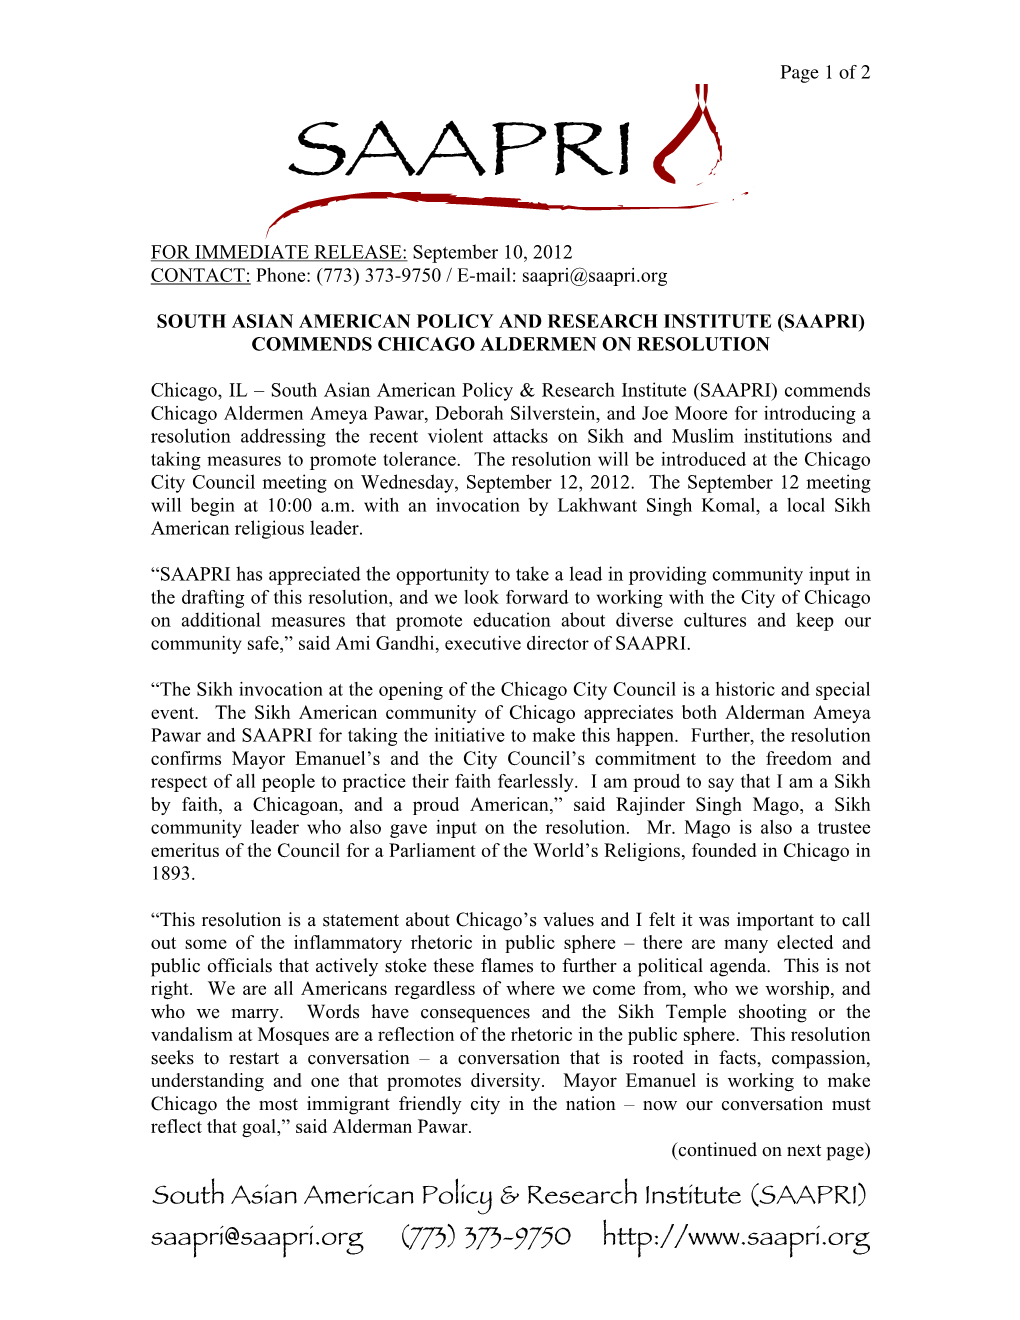 2012-09-10 SAAPRI Press Release Re Chicago Resolution FINAL